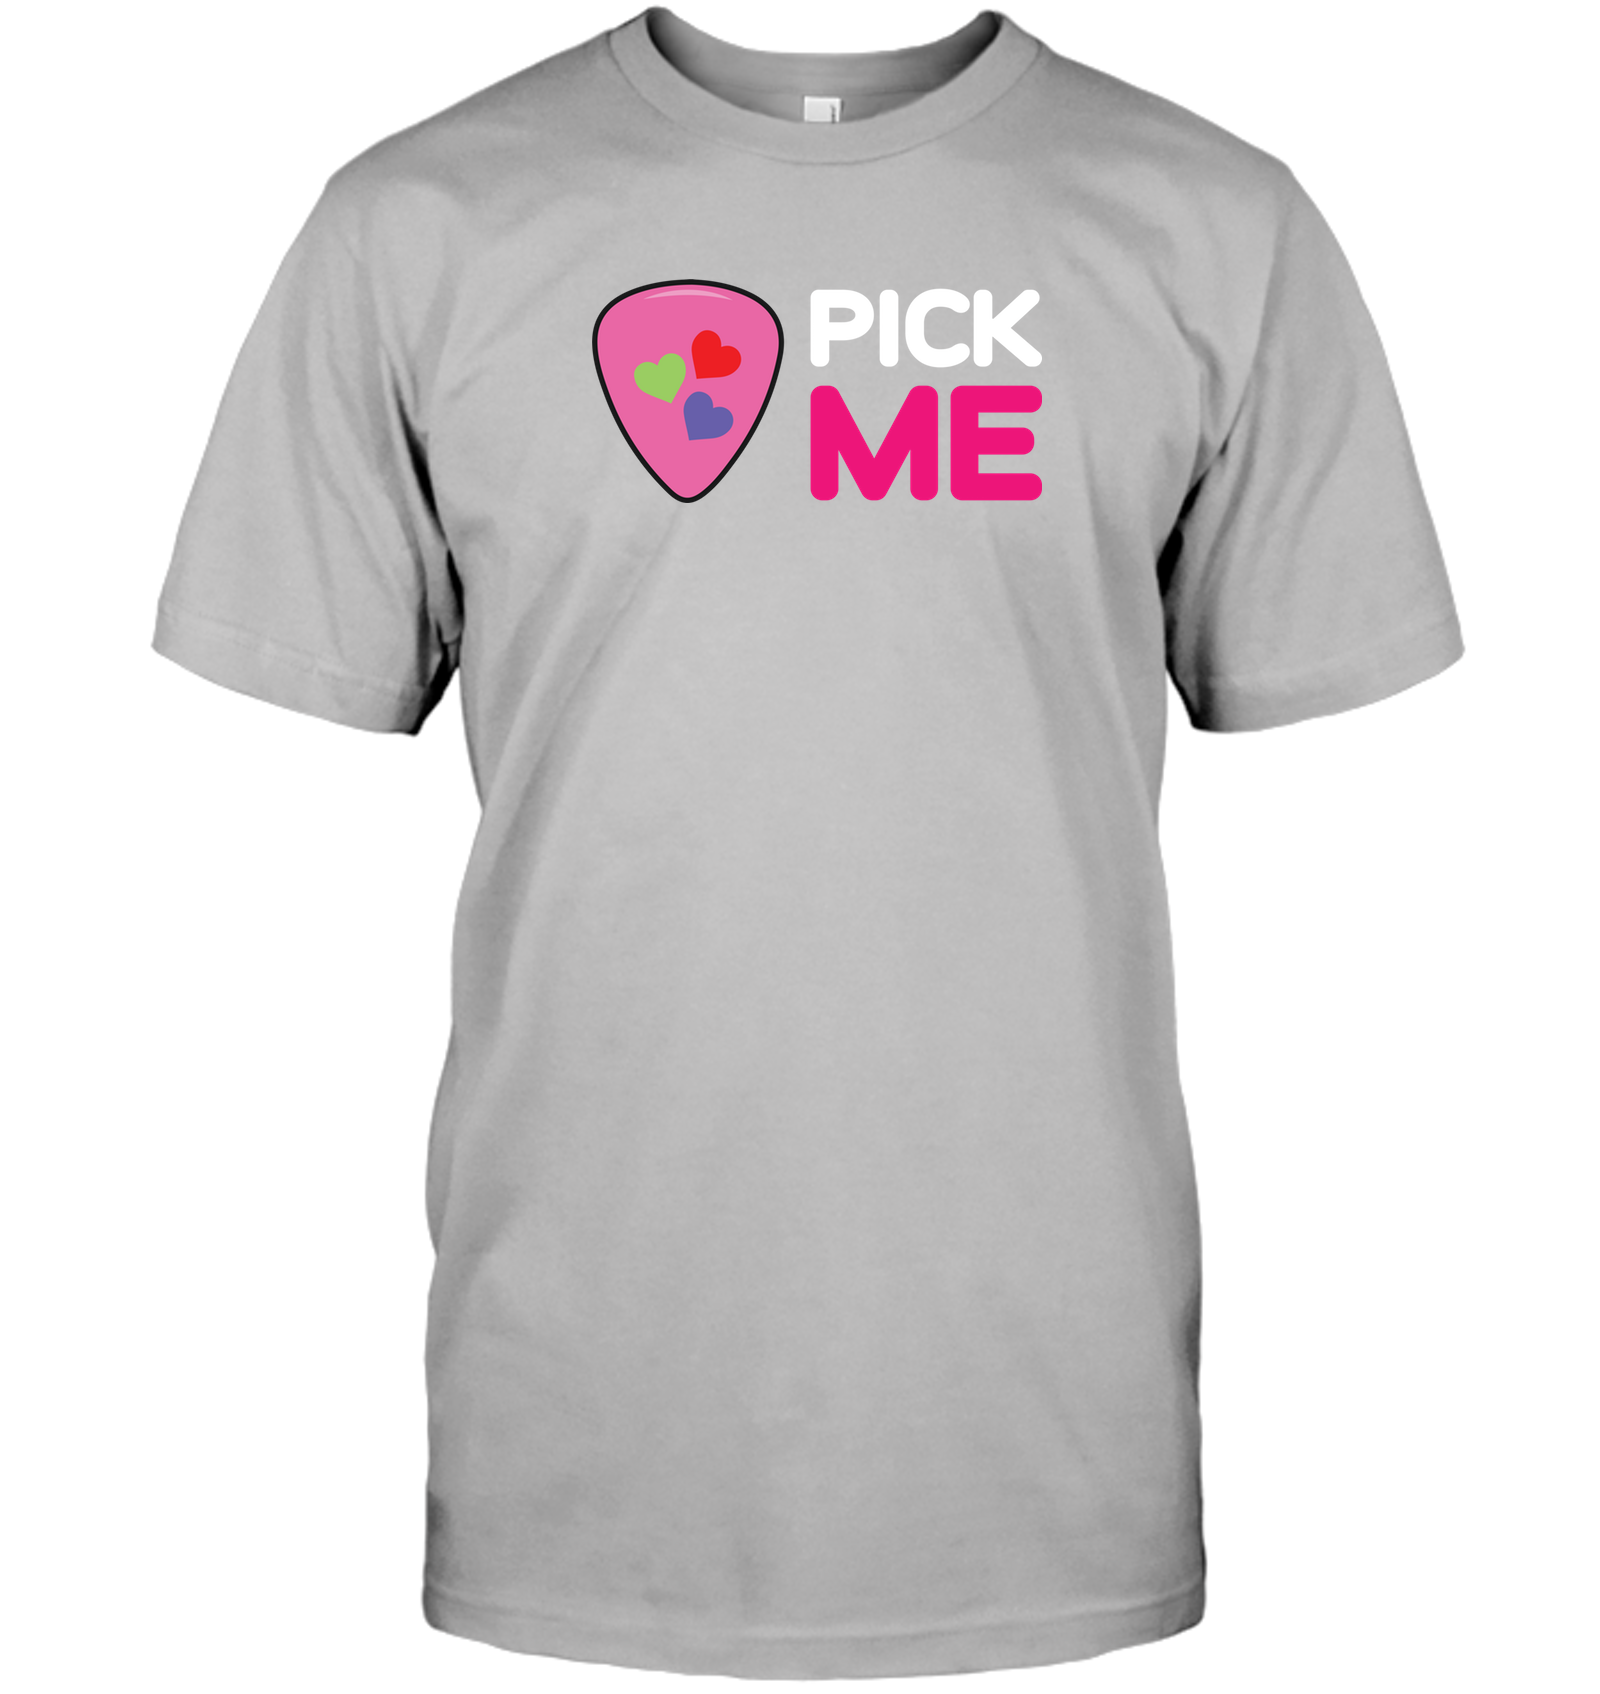 Pick Me - Hanes Adult Tagless® T-Shirt